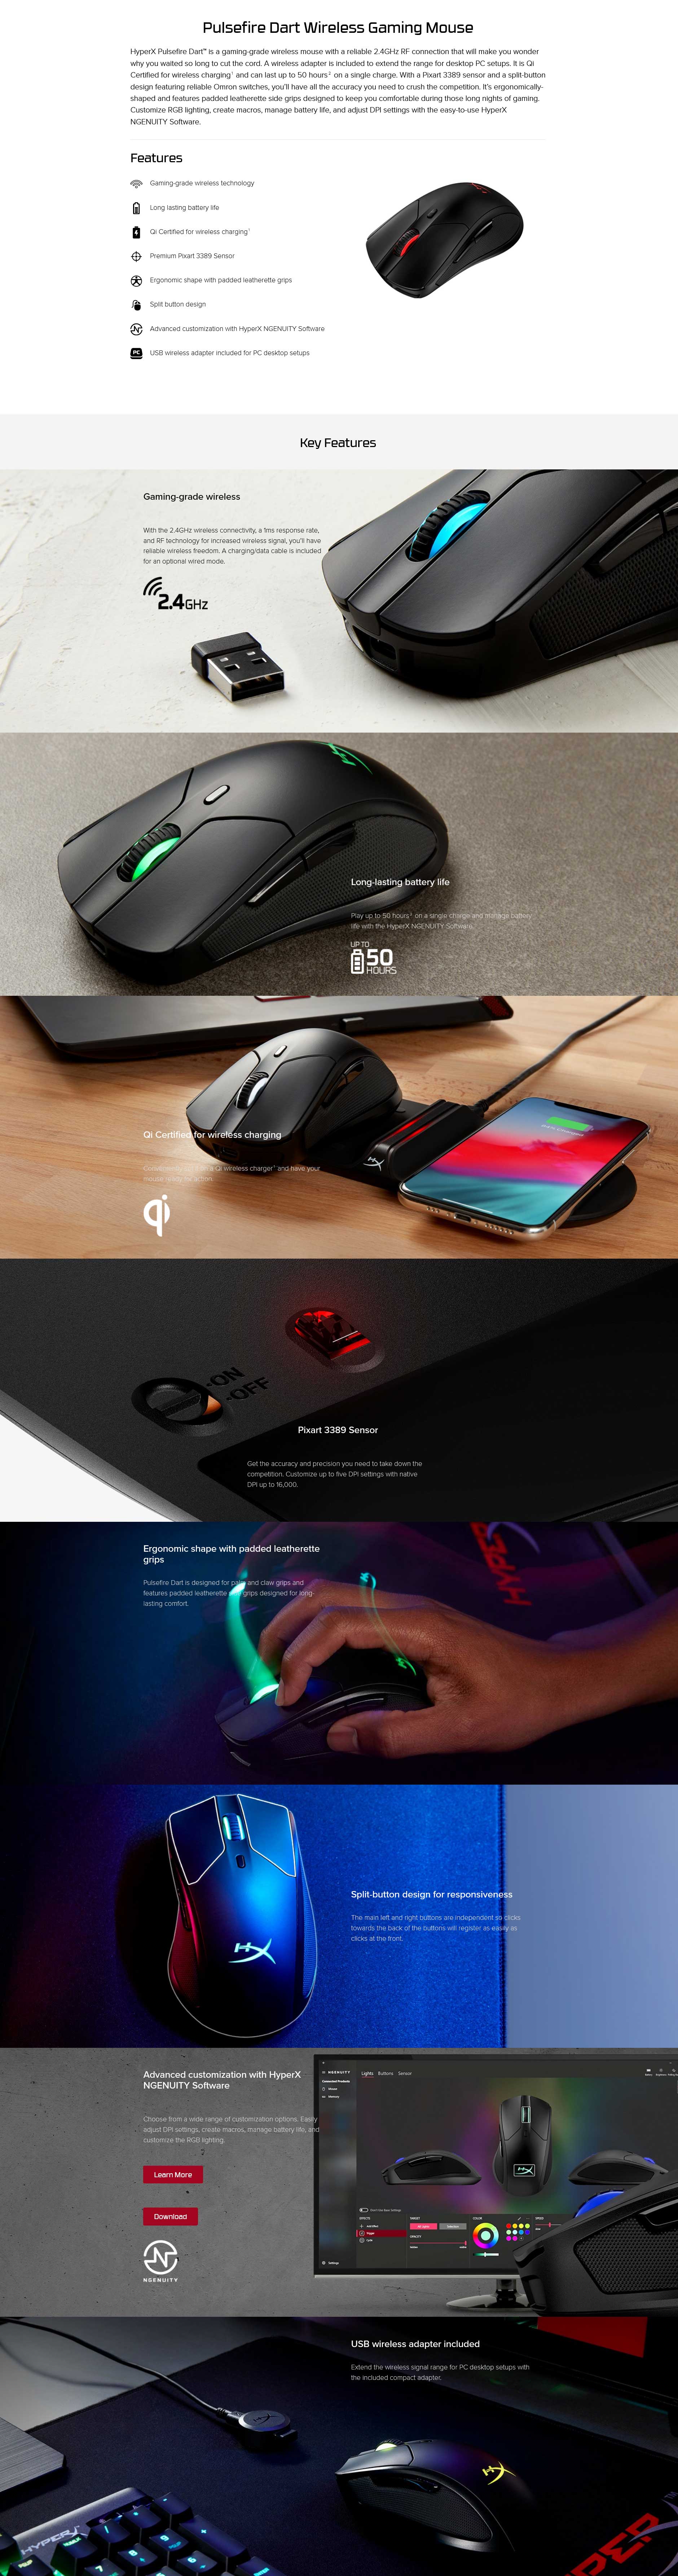 Kingston HyperX Pulsefire Dart Wireless RGB Gaming Mouse Details